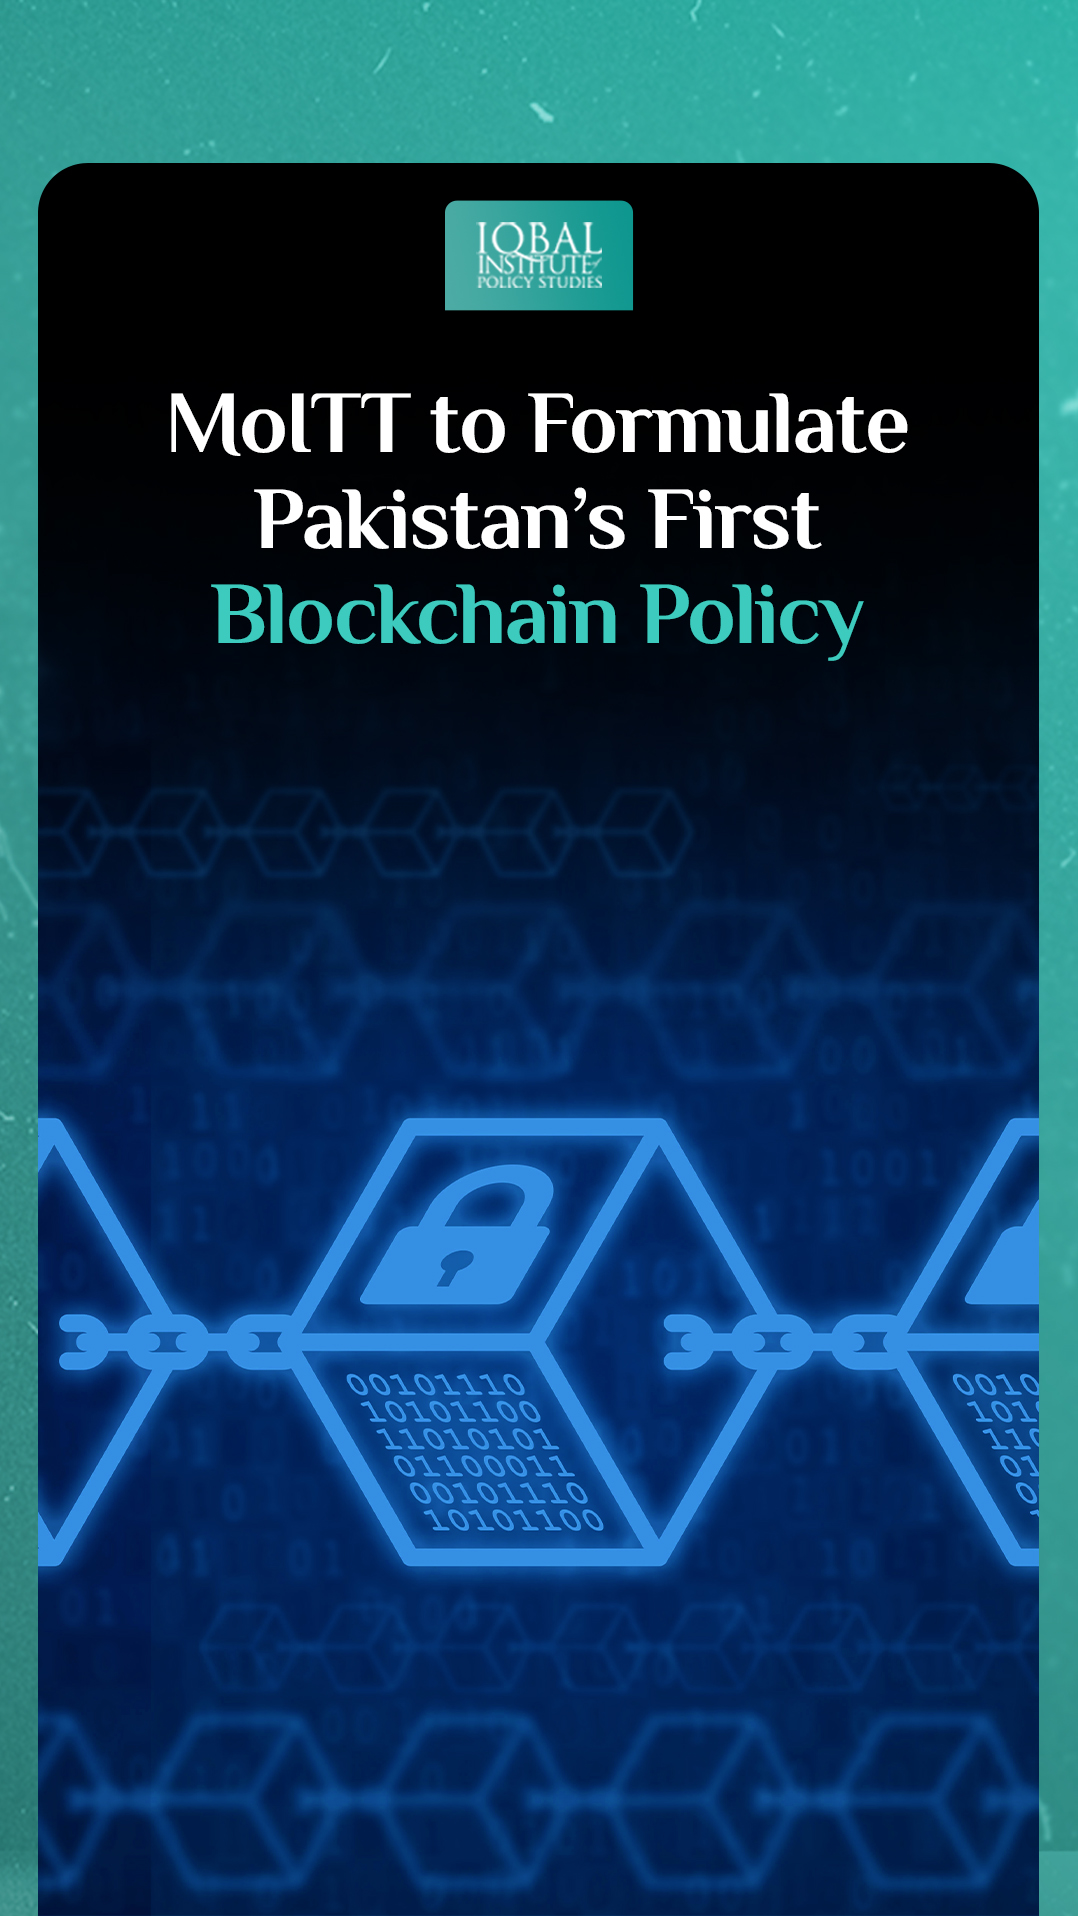 MoITT to Formulate Pakistan’s First Blockchain Policy